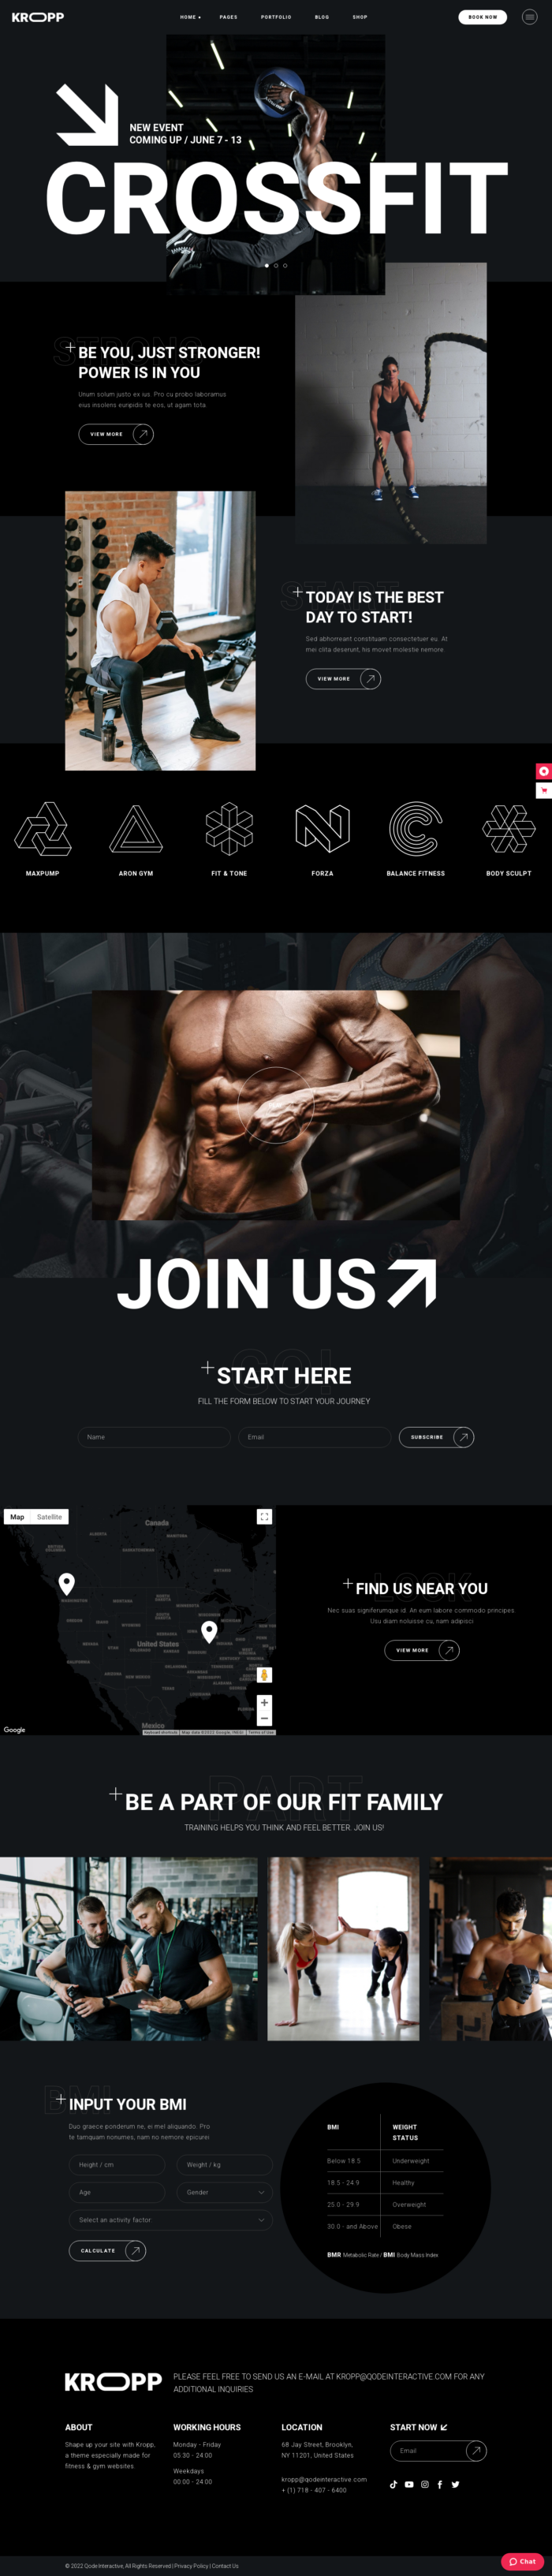 Mau Giao Dien Website Gym Kropp Pc - Web Speed Up